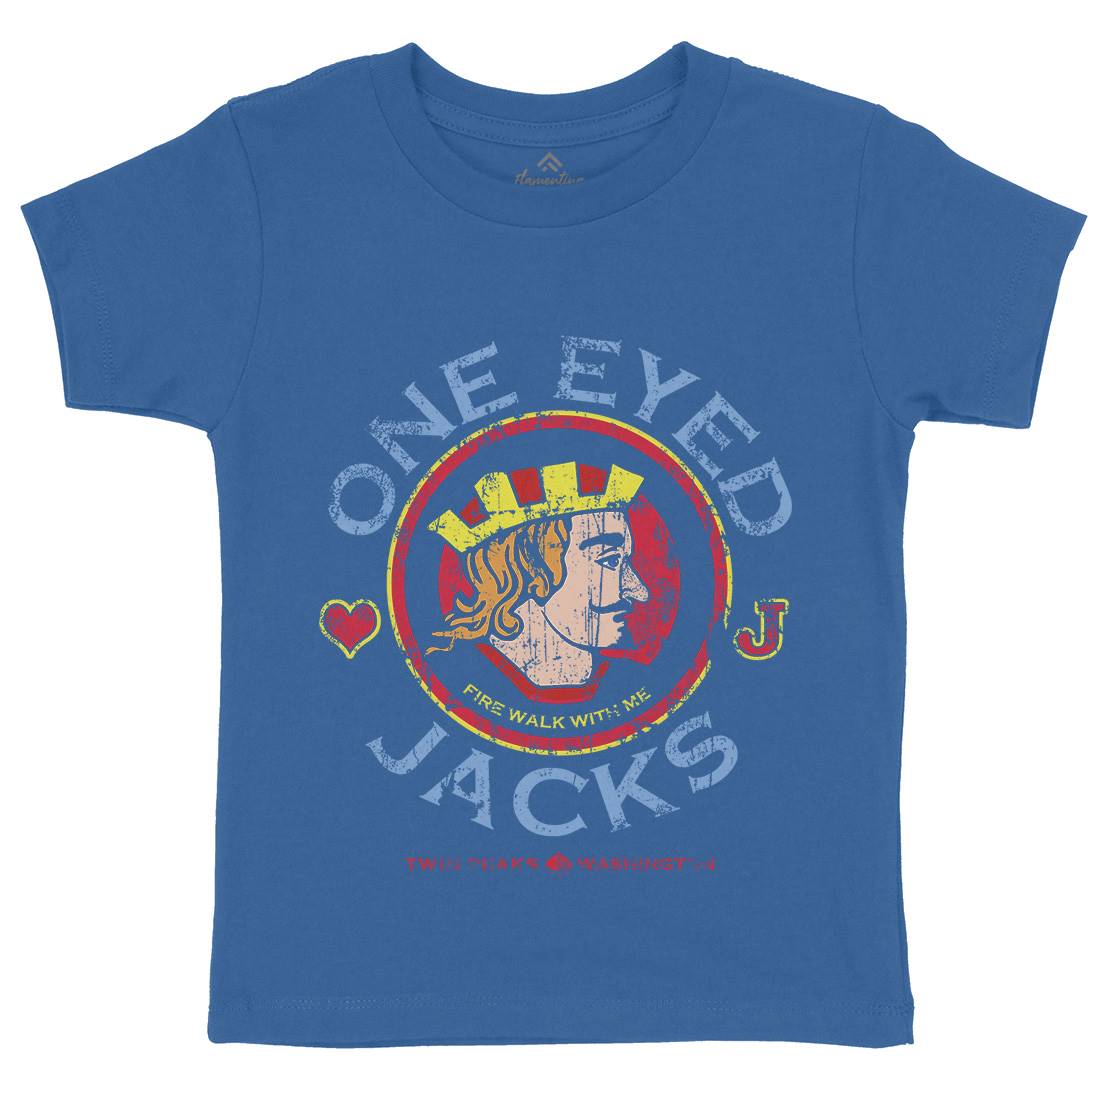 One Eyed Jacks Kids Crew Neck T-Shirt Horror D296